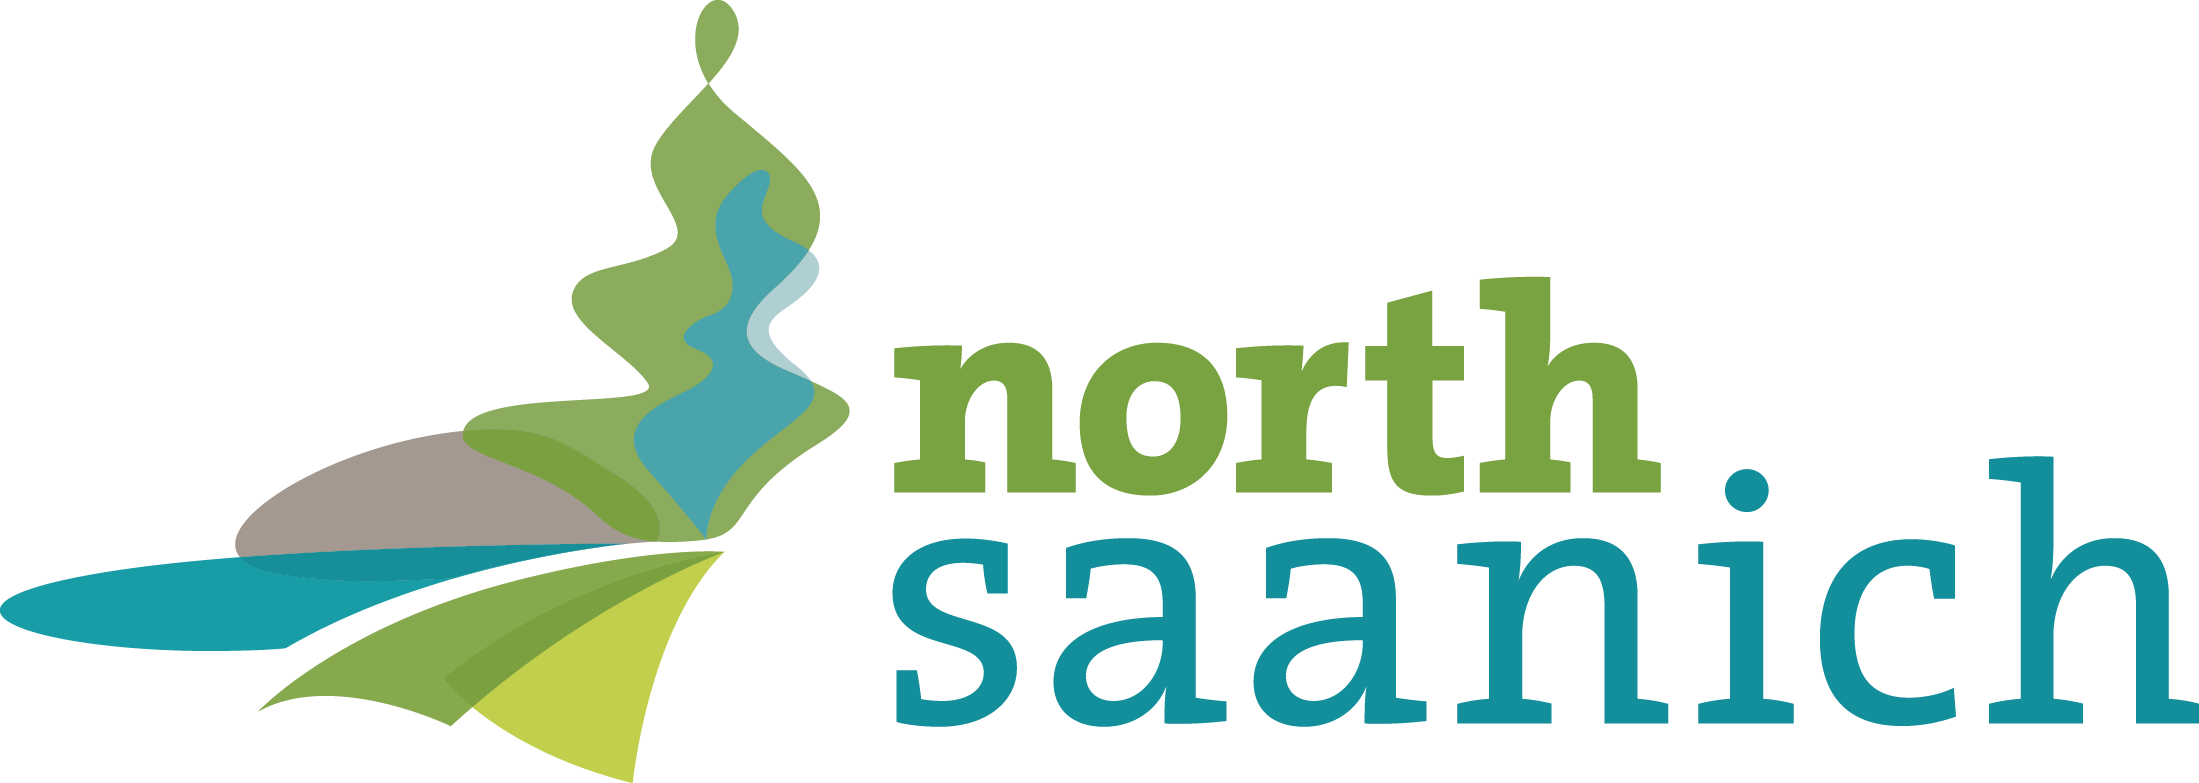 District of North Saanich logo